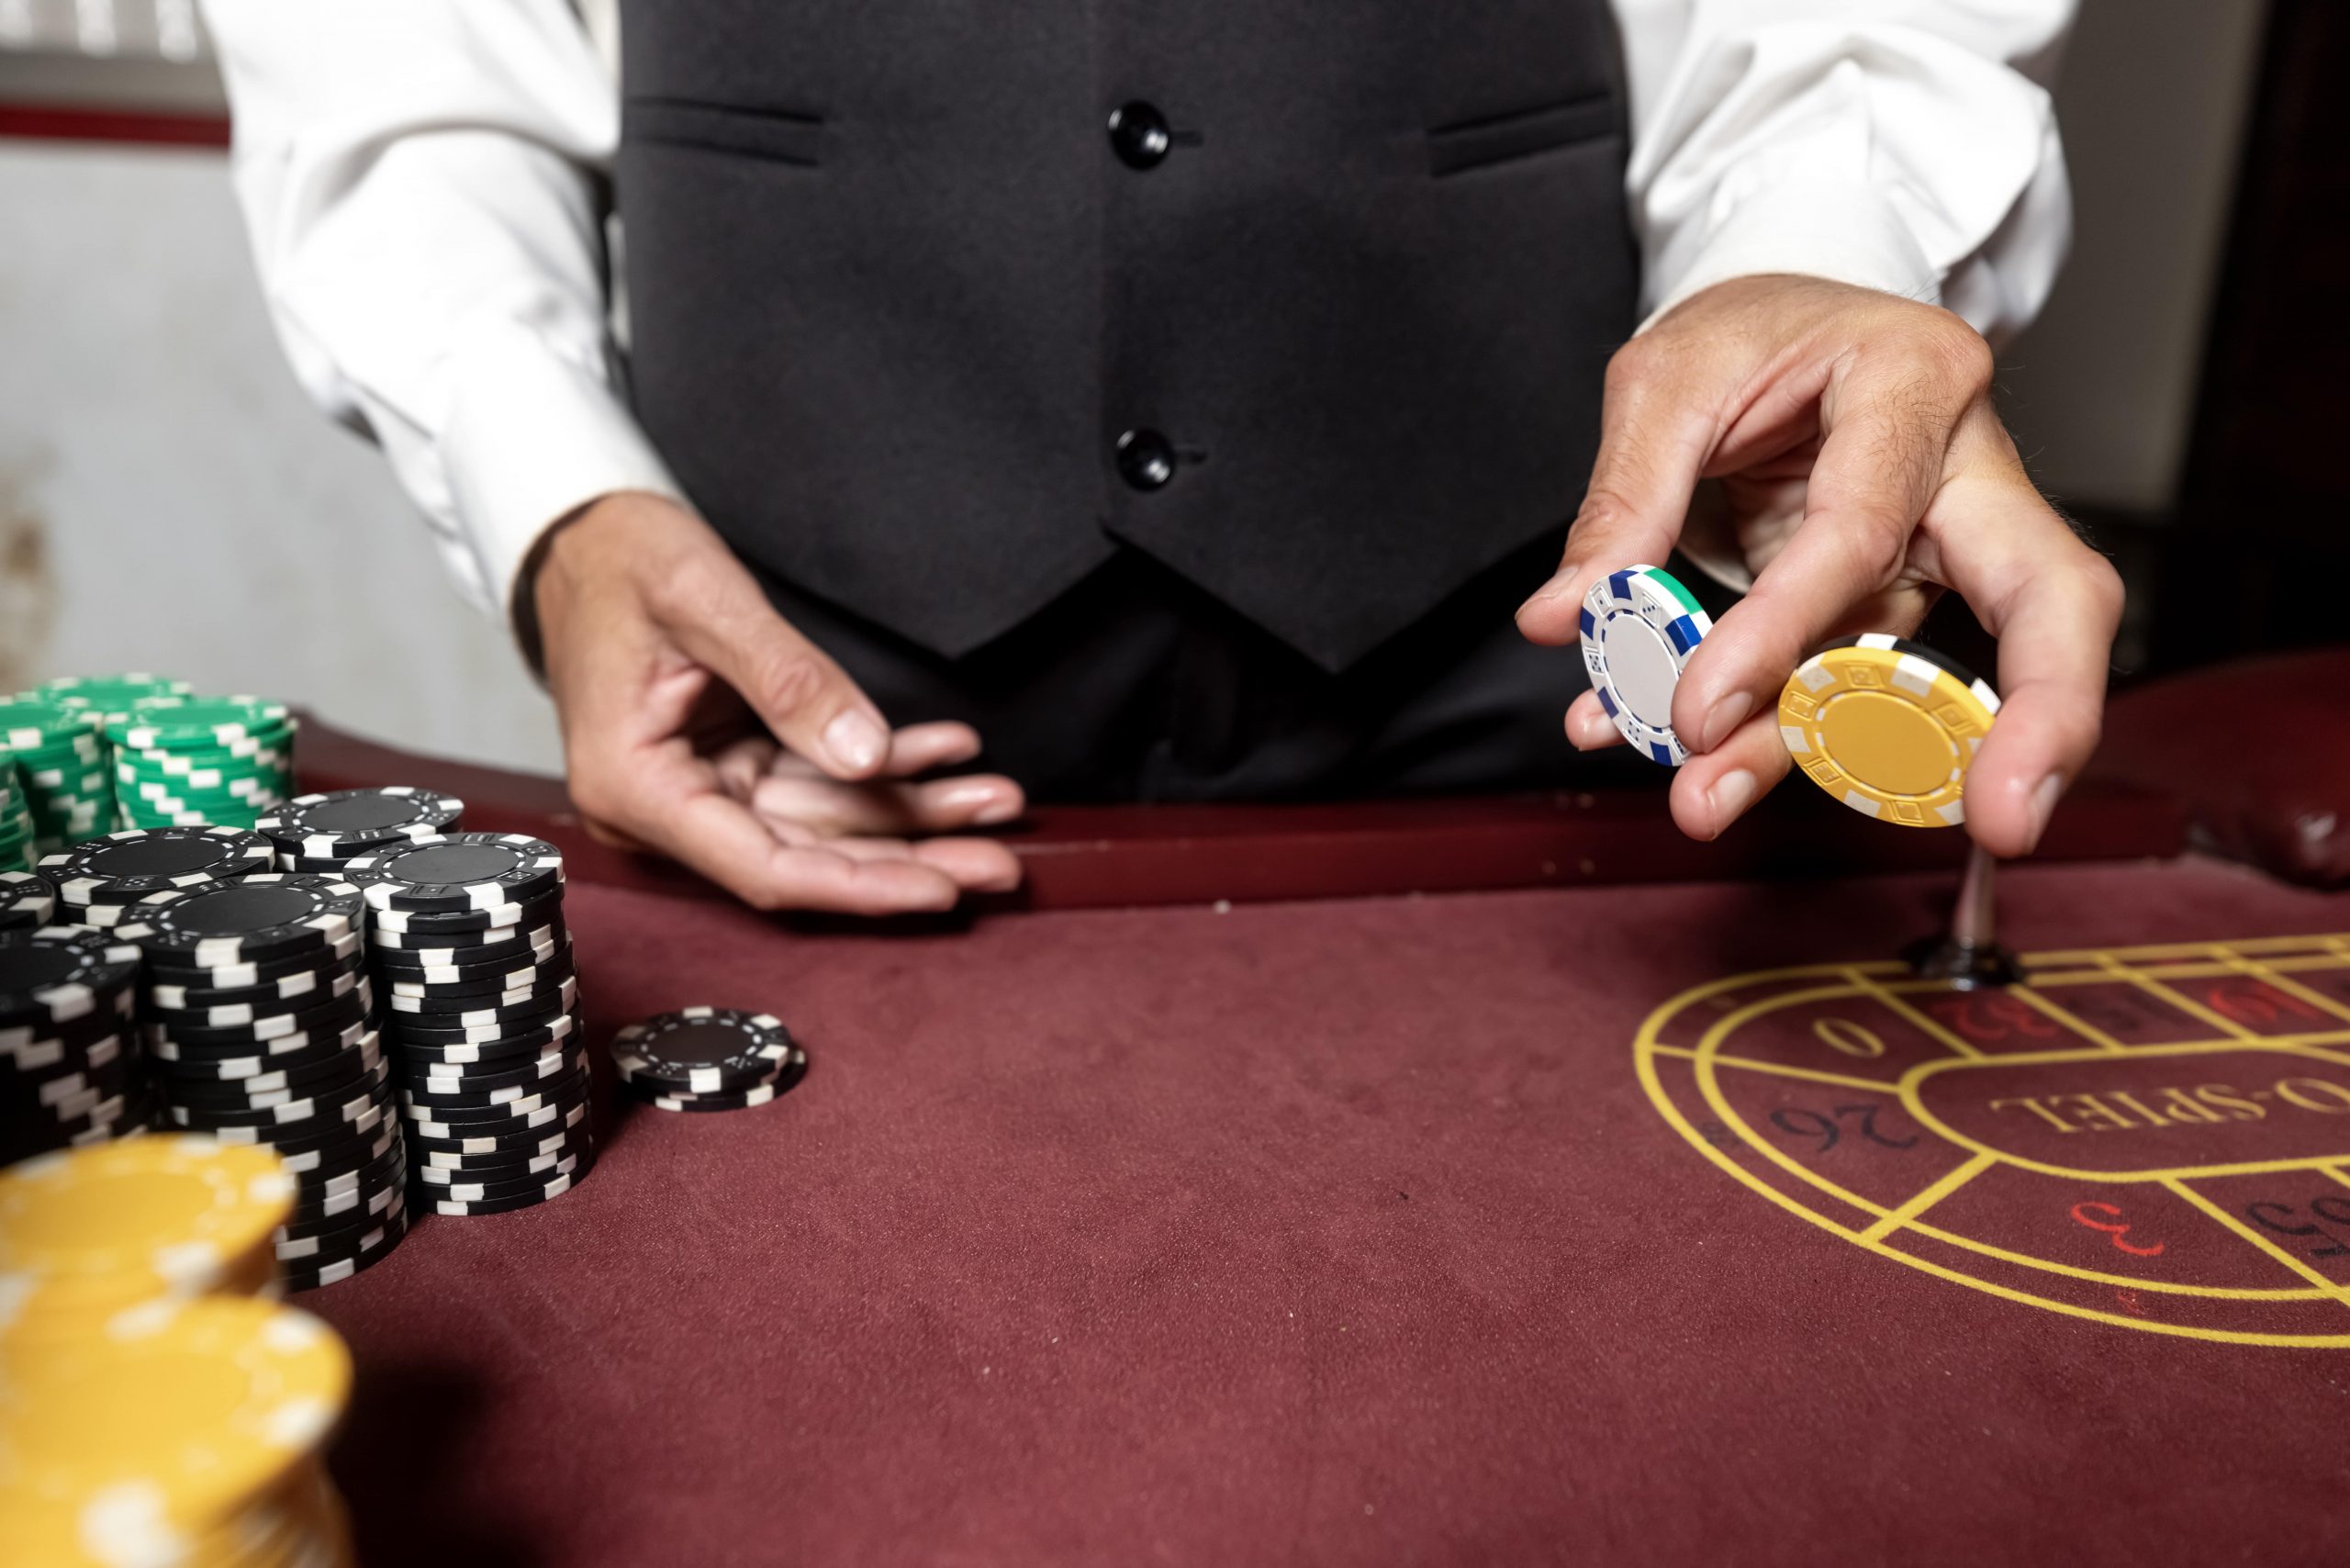 Taking the Risks in Gambling